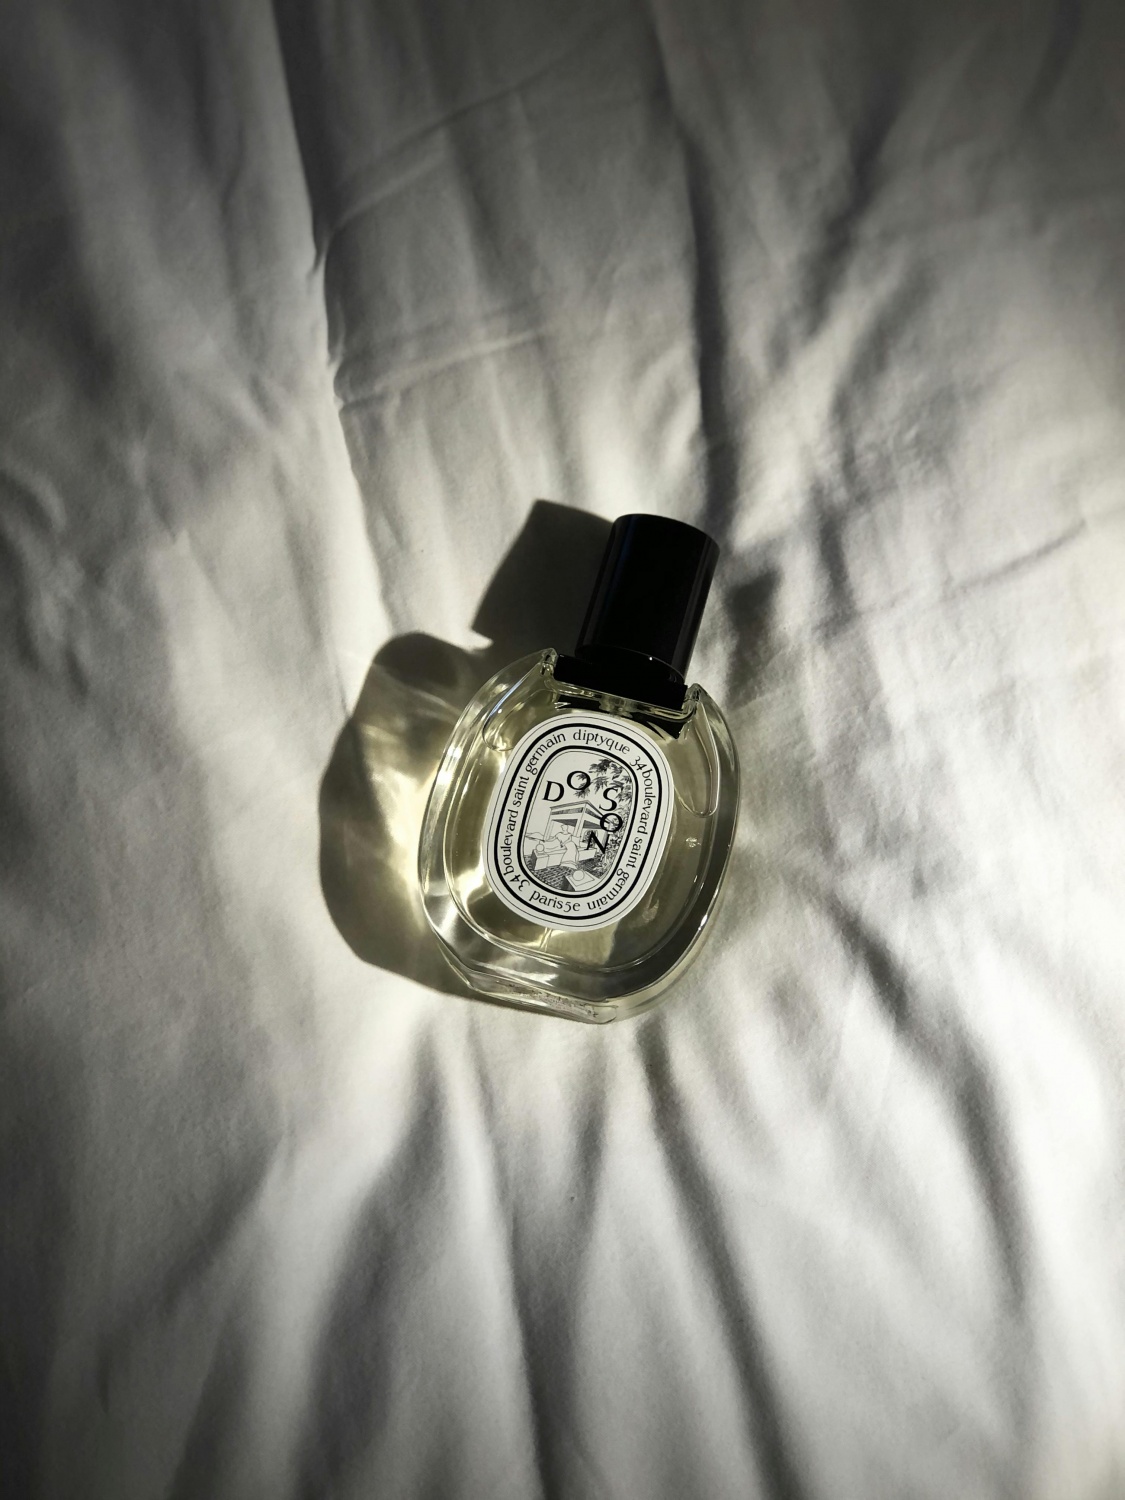 A bottle of do son perfume 